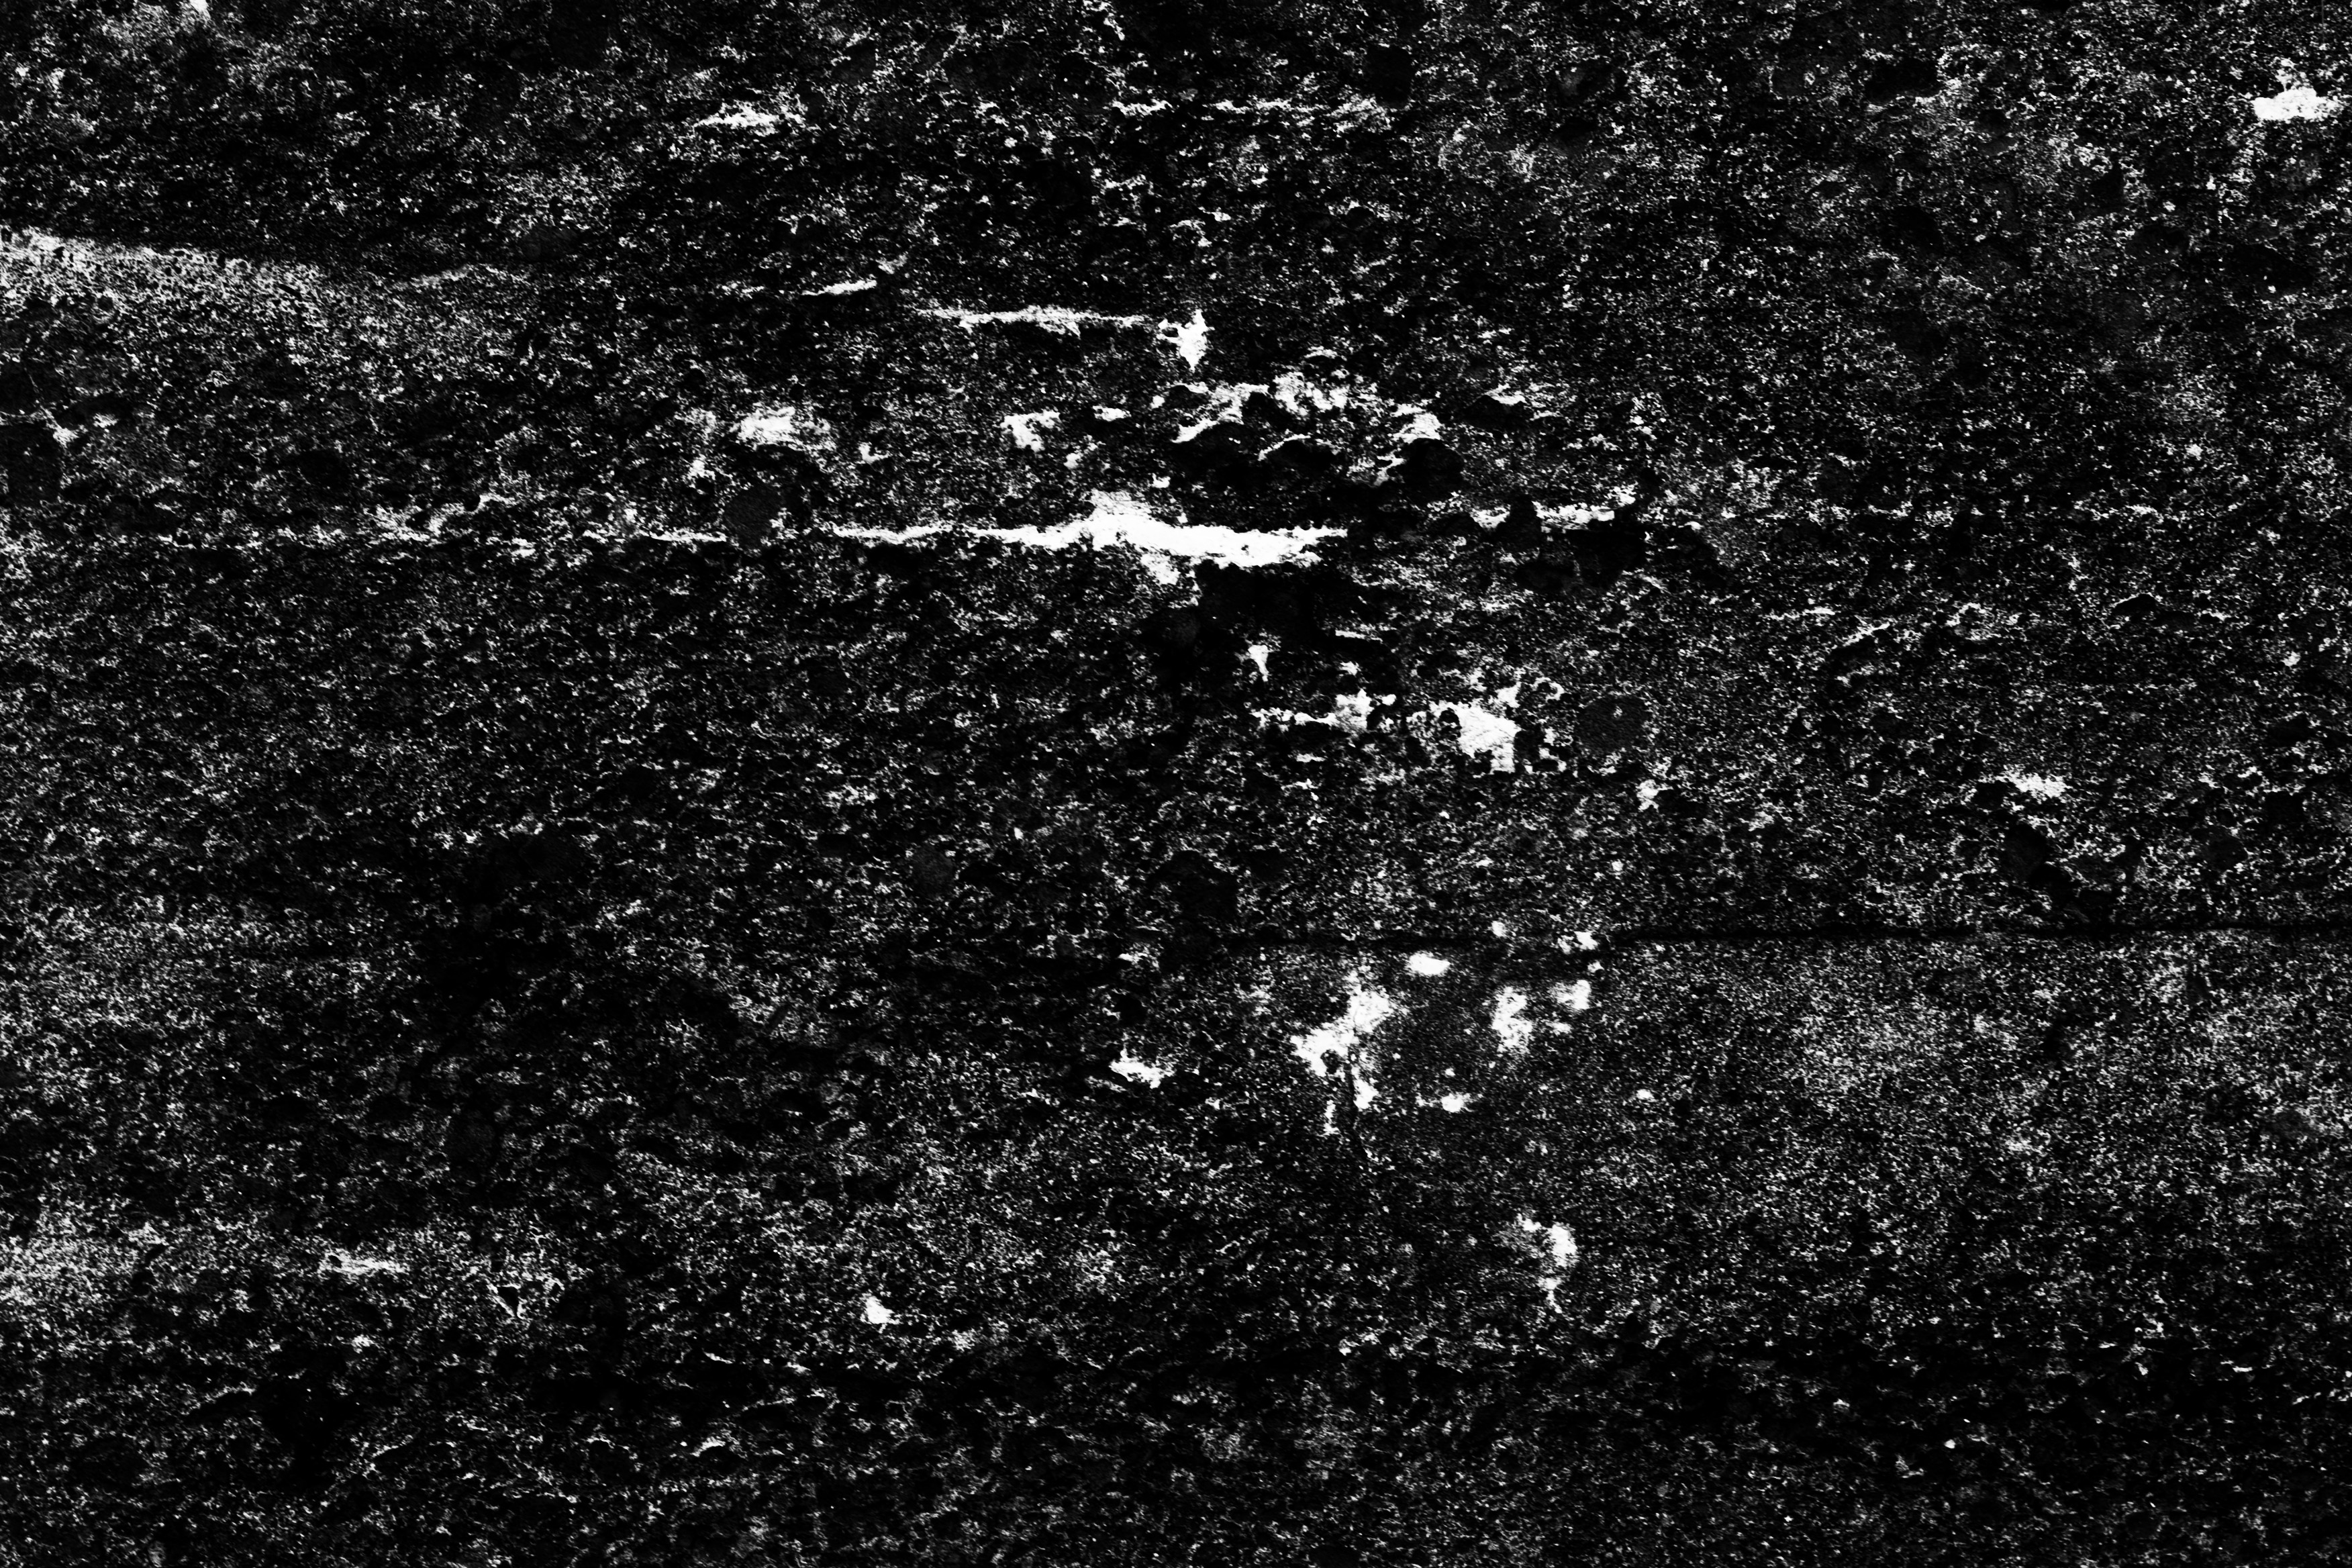 Grunge stone texture photo